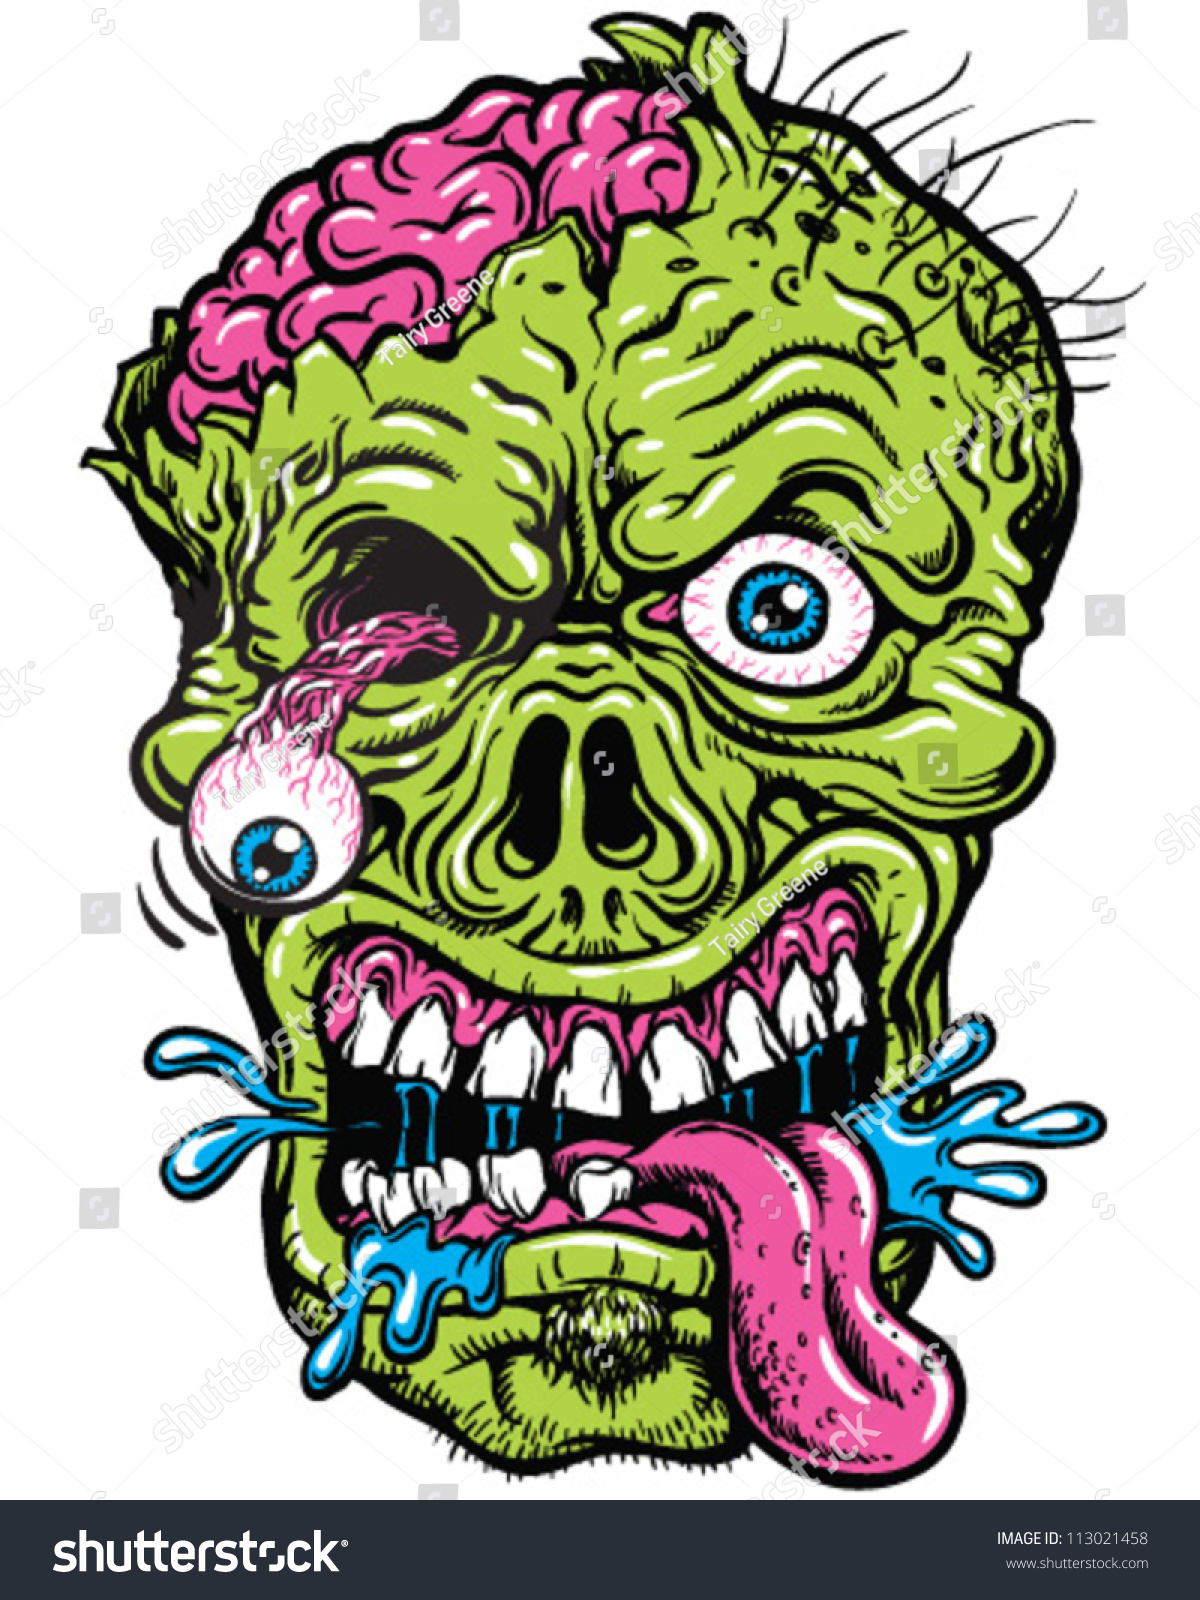 zombie clipart vector - photo #42